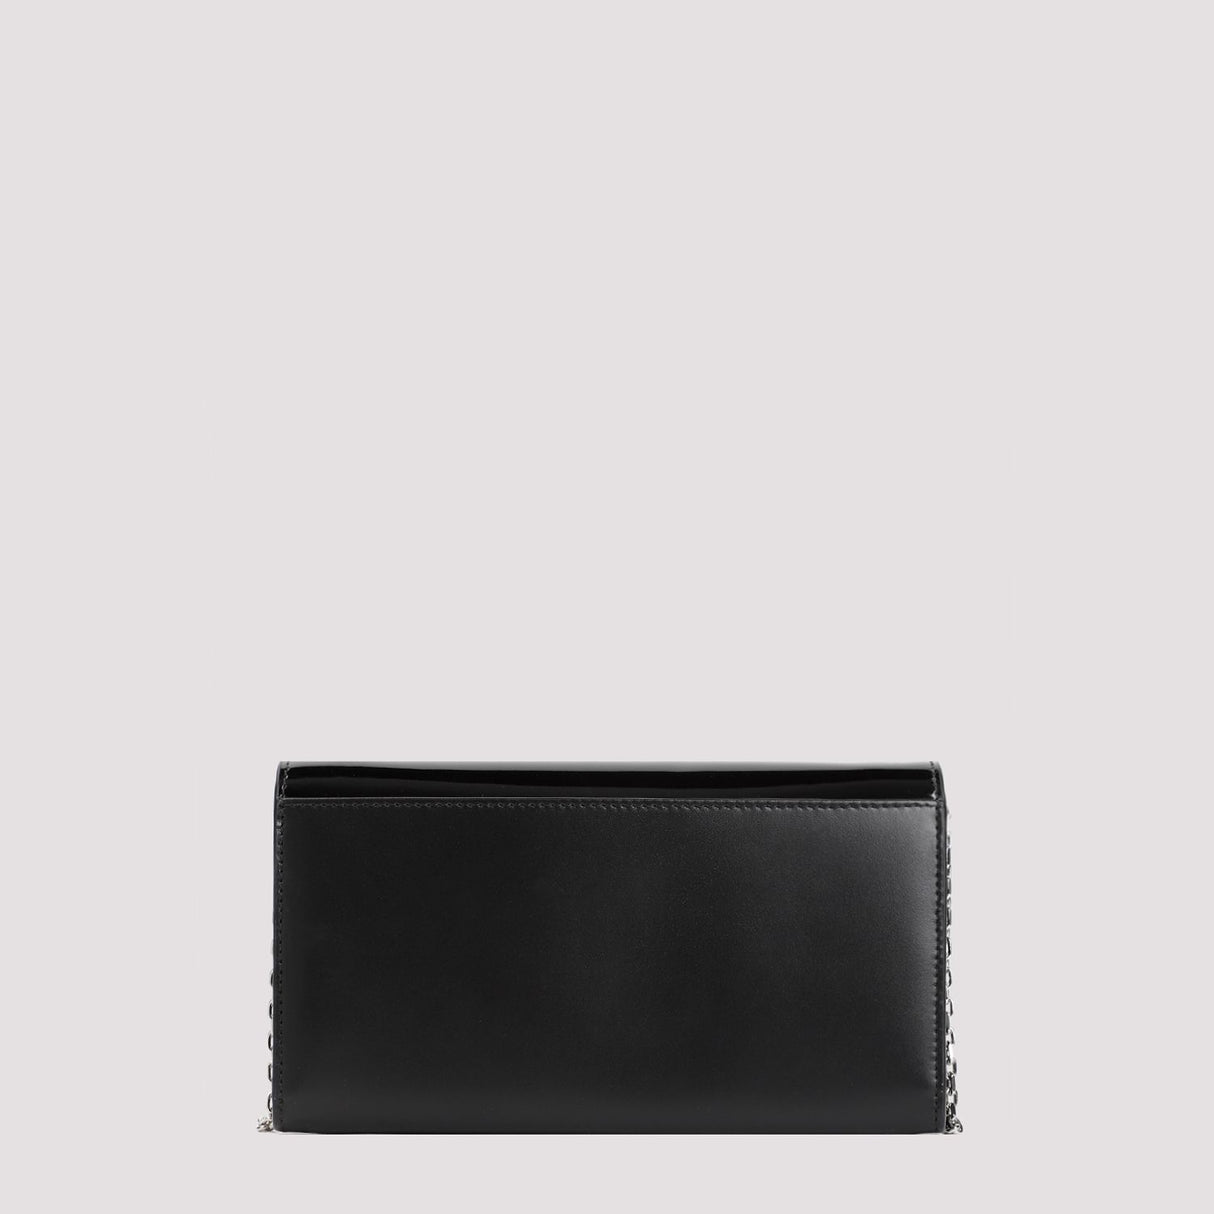 Medium Leather Chain Wallet - Black